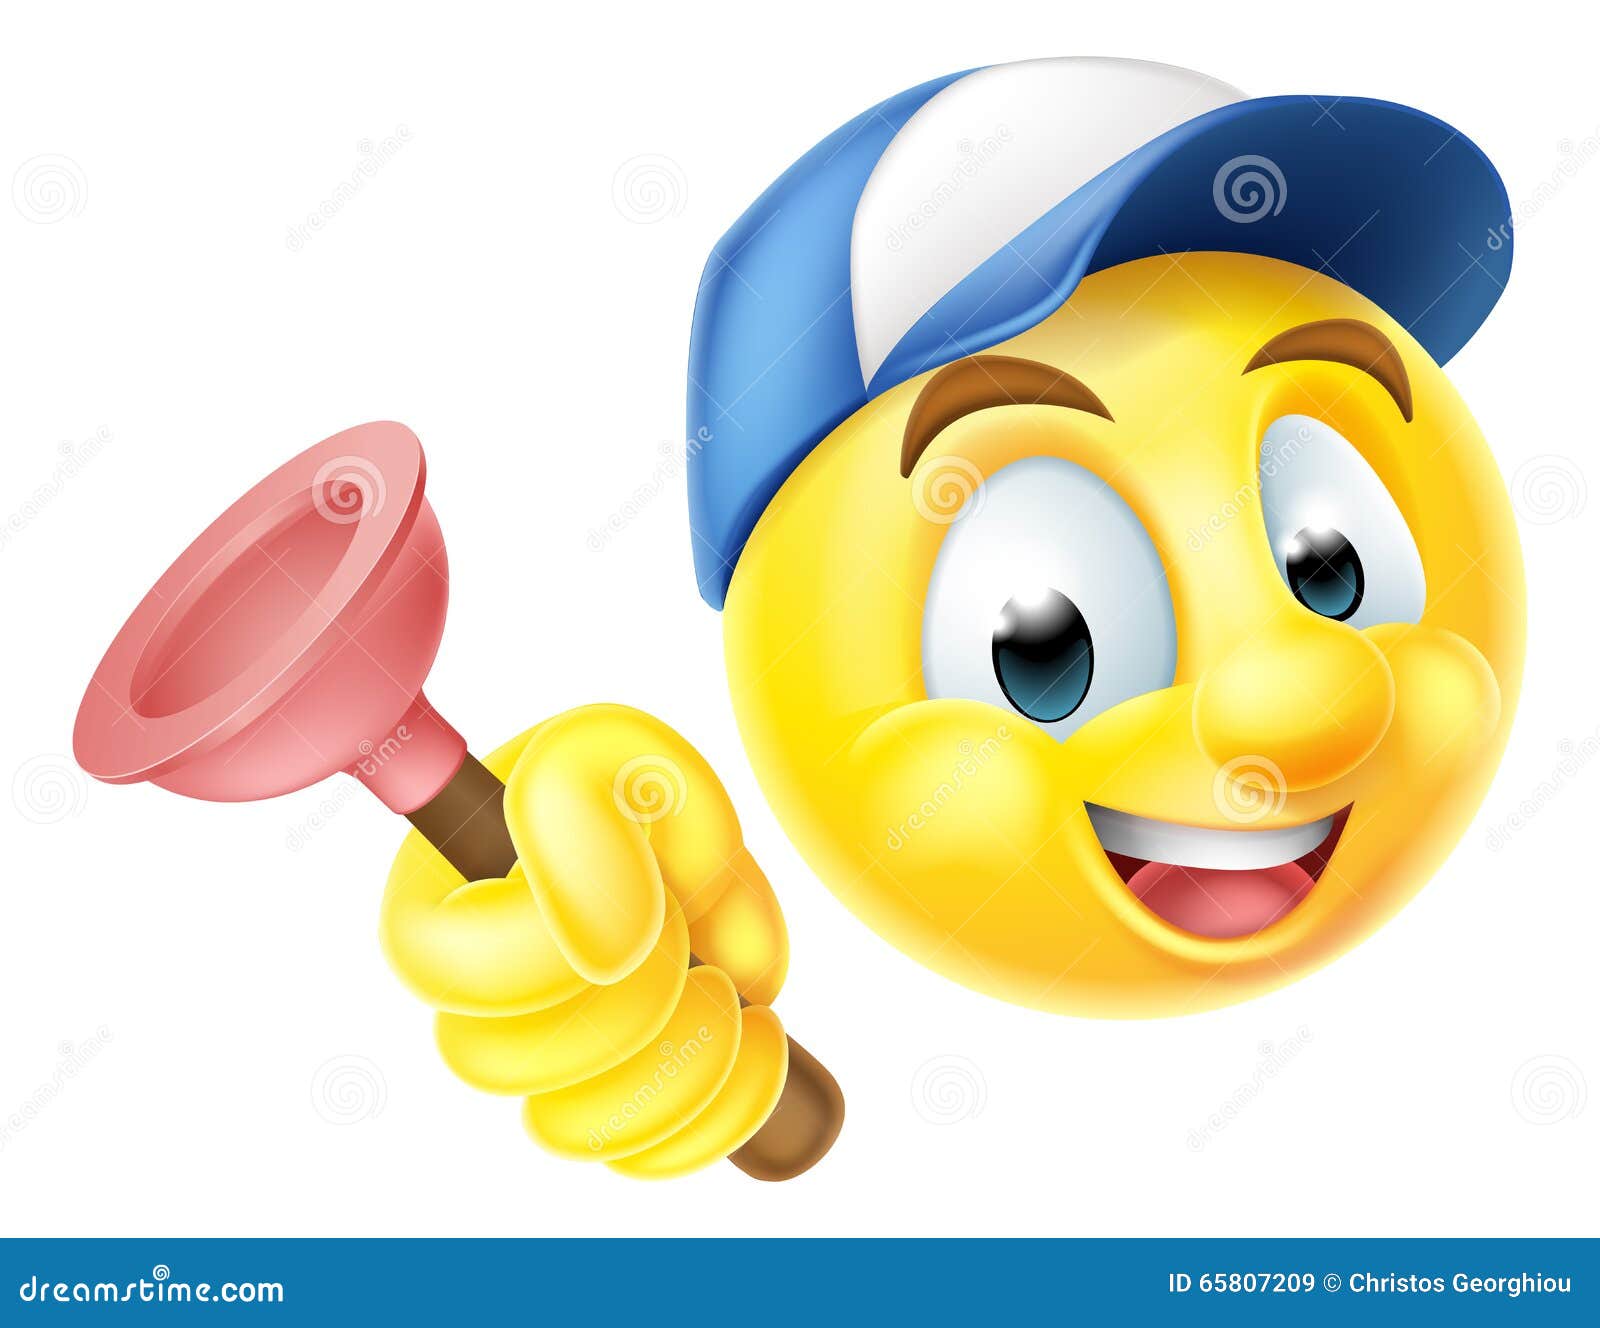 plumber-emoji-emoticon-plunger-cartoon-smiley-face-character-holding-sink-toilet-65807209.jpg